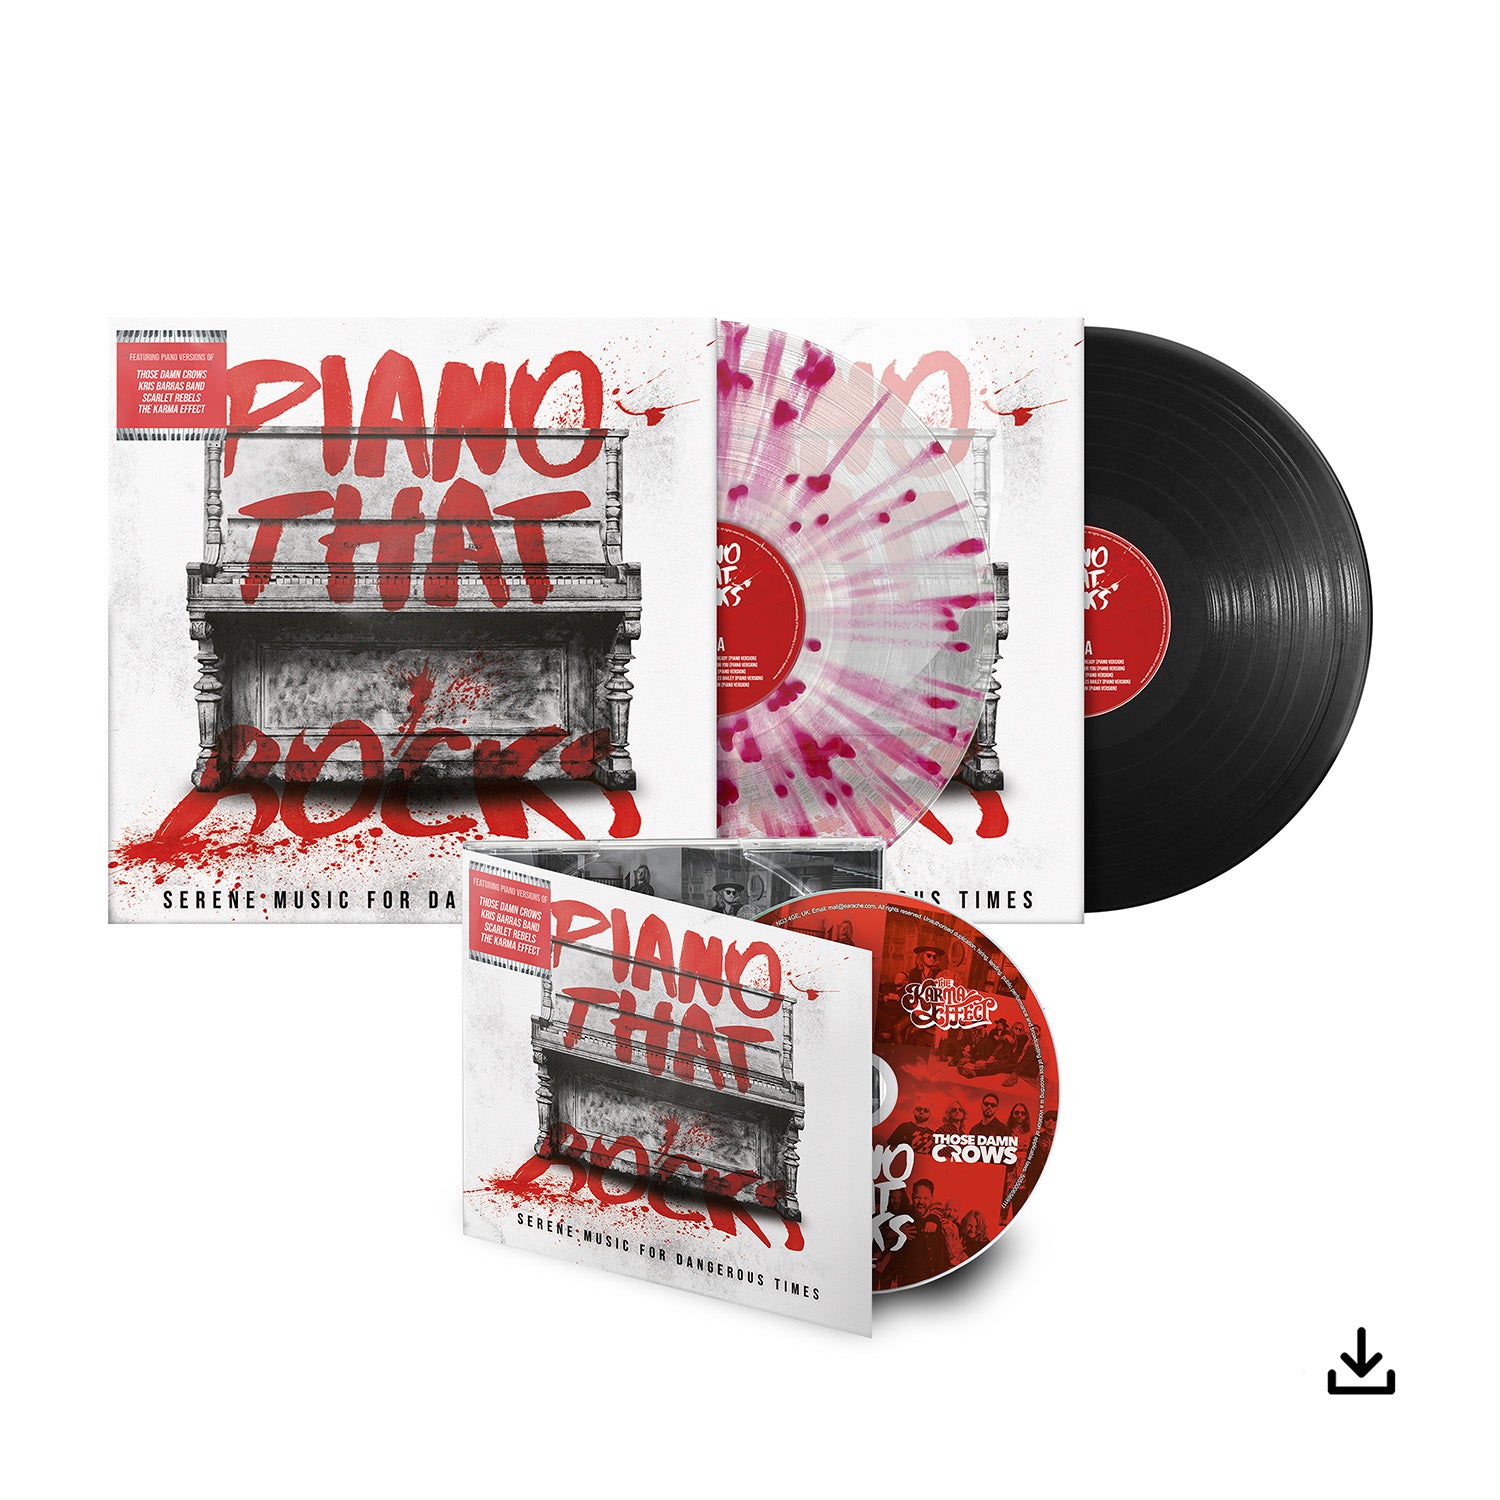 Var. "Piano That Rocks" Completist Bundle - Colour Vinyl, Black Vinyl, Digipak CD & Download - PRE-ORDER